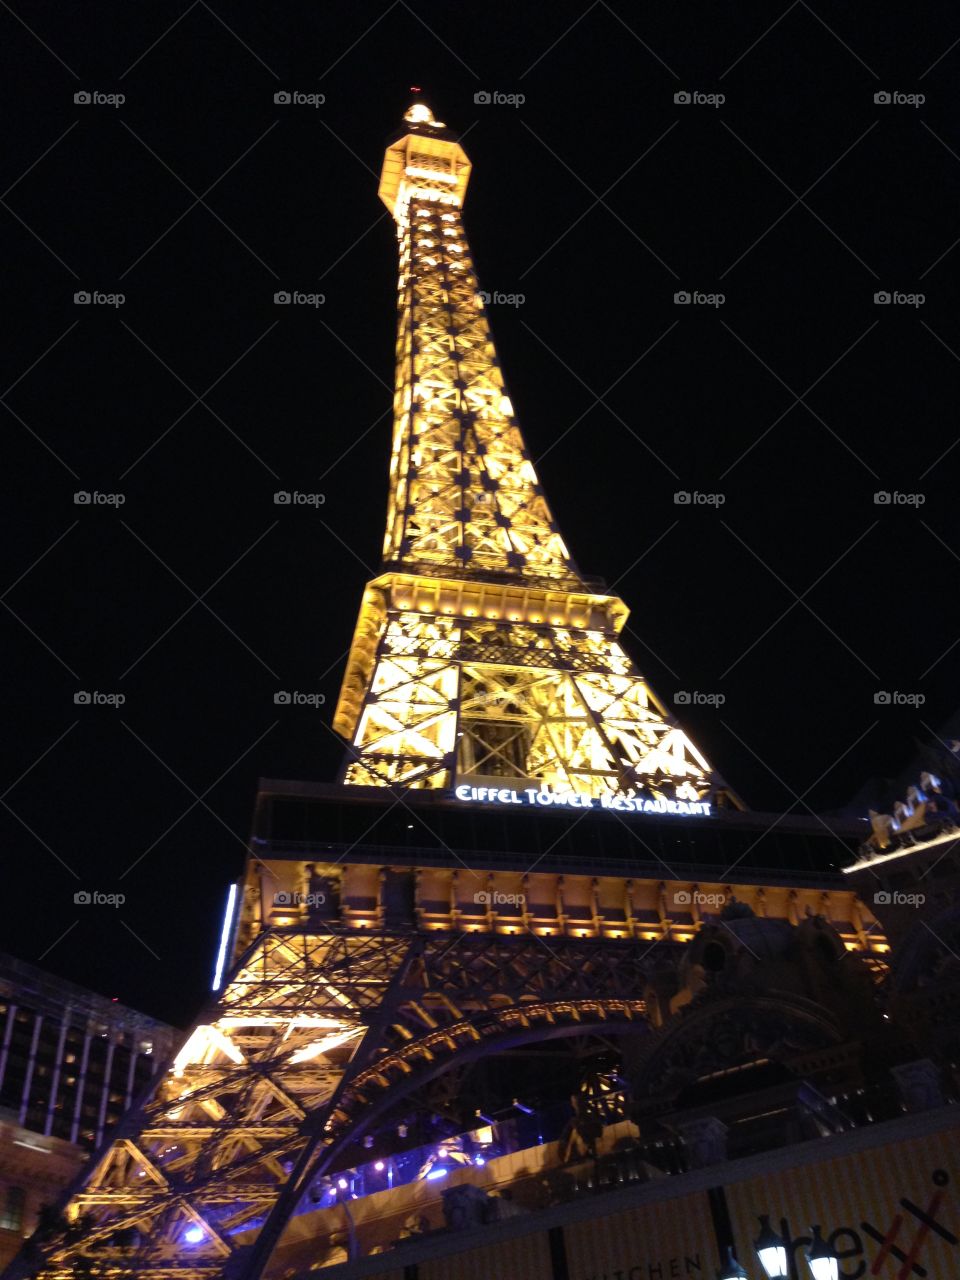 Eifle Tower Paris Las Vegas. This is the Eifle Tower in Las Vegad